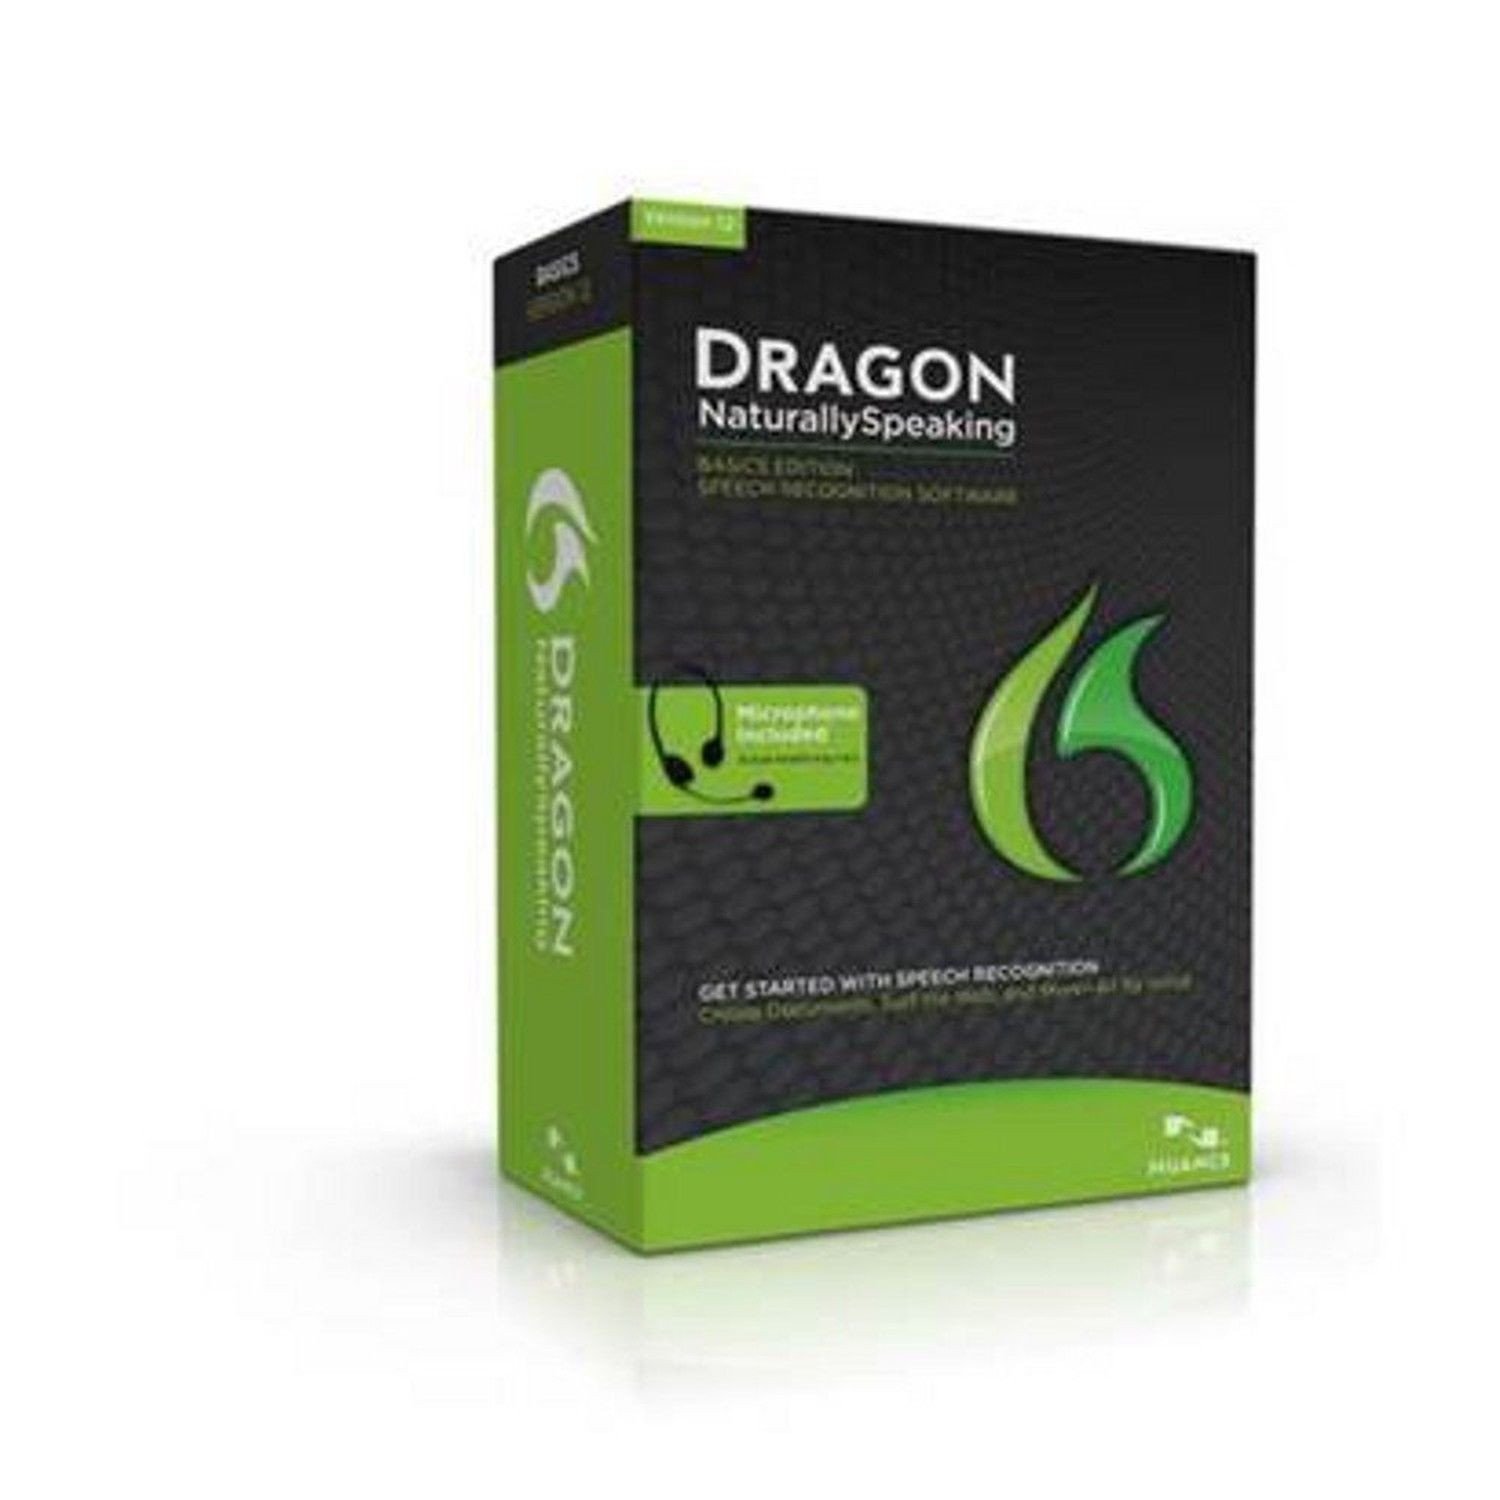 dragon naturally speaking software free download